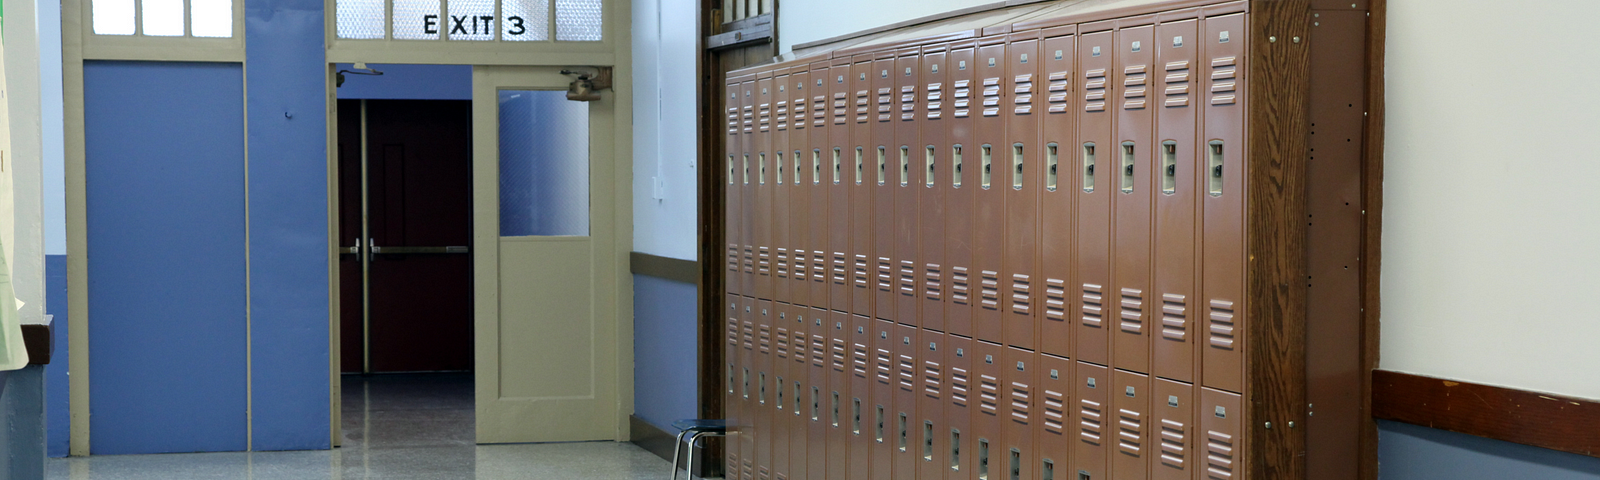 A school hallway with a row of lockers